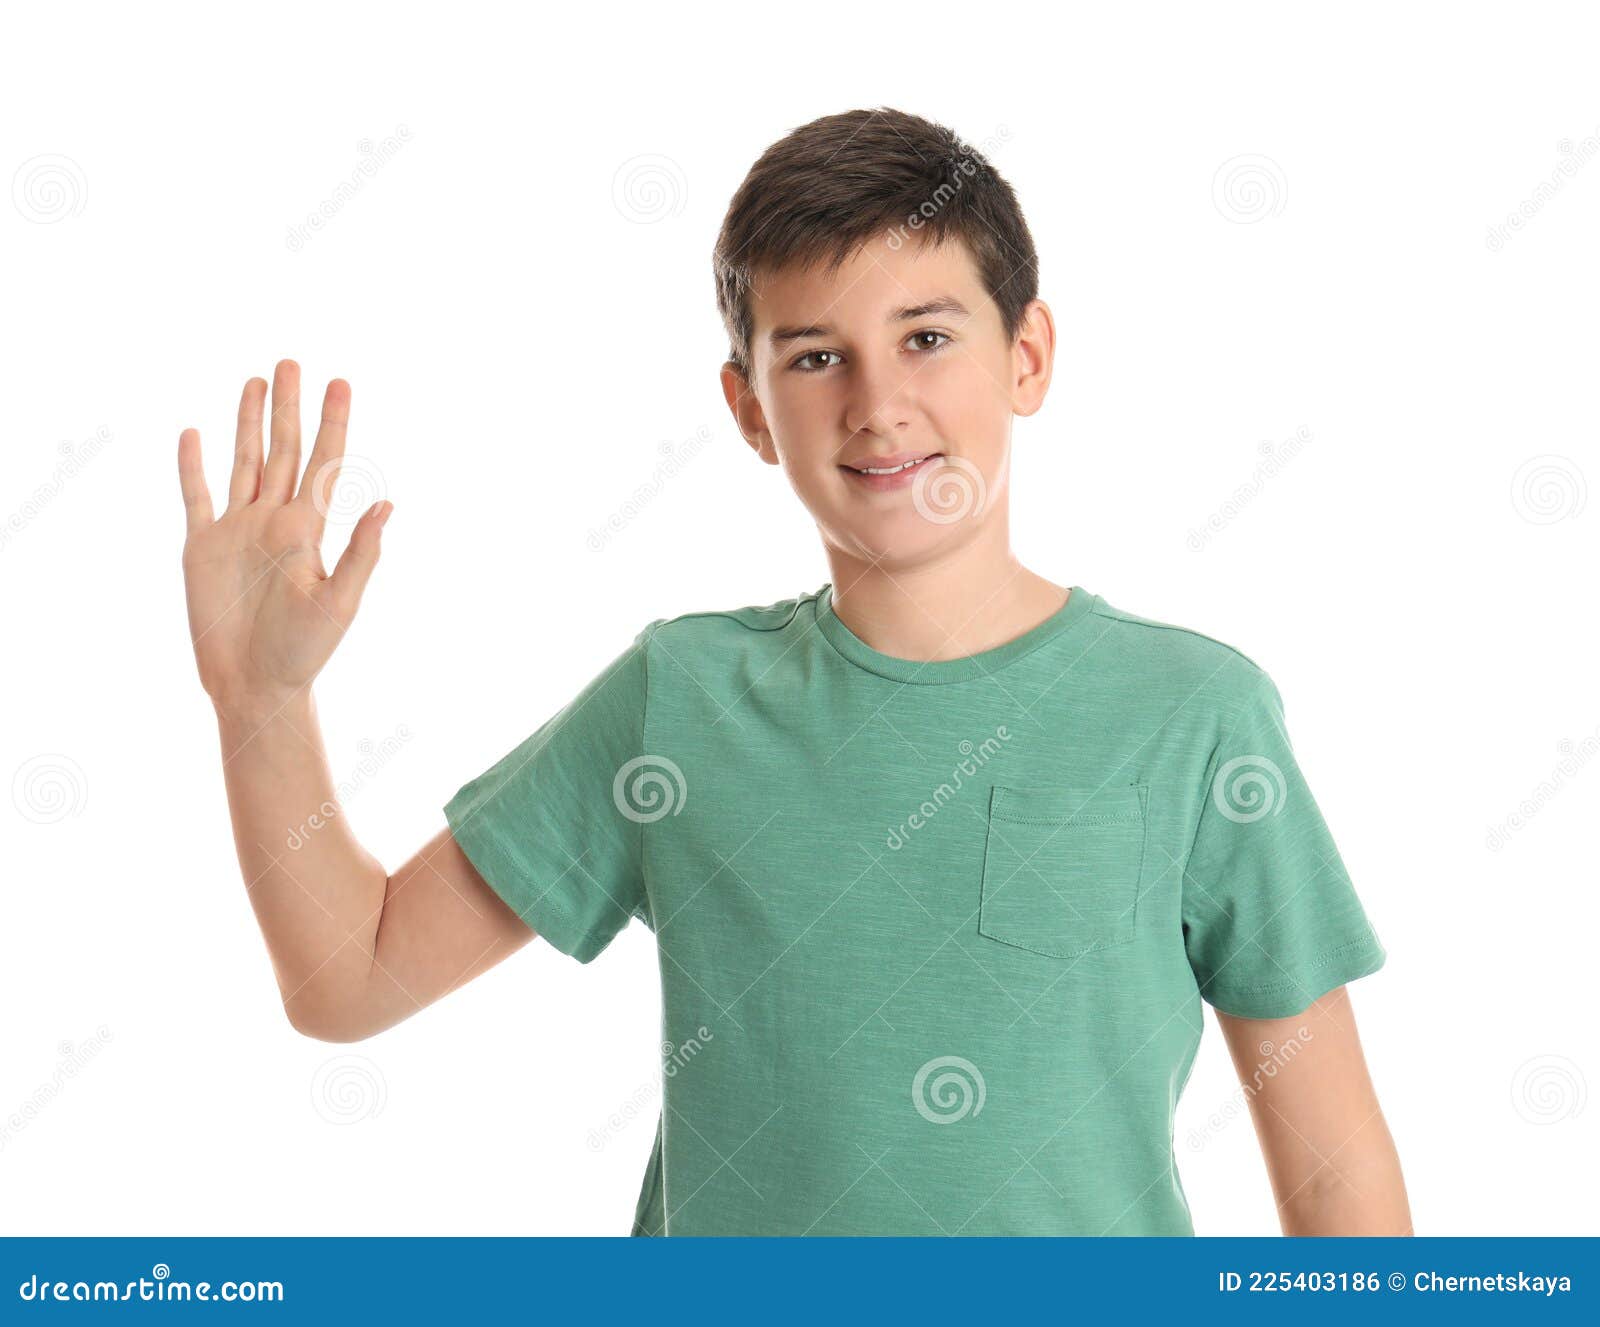 happy teenage boy waving to say hello on white